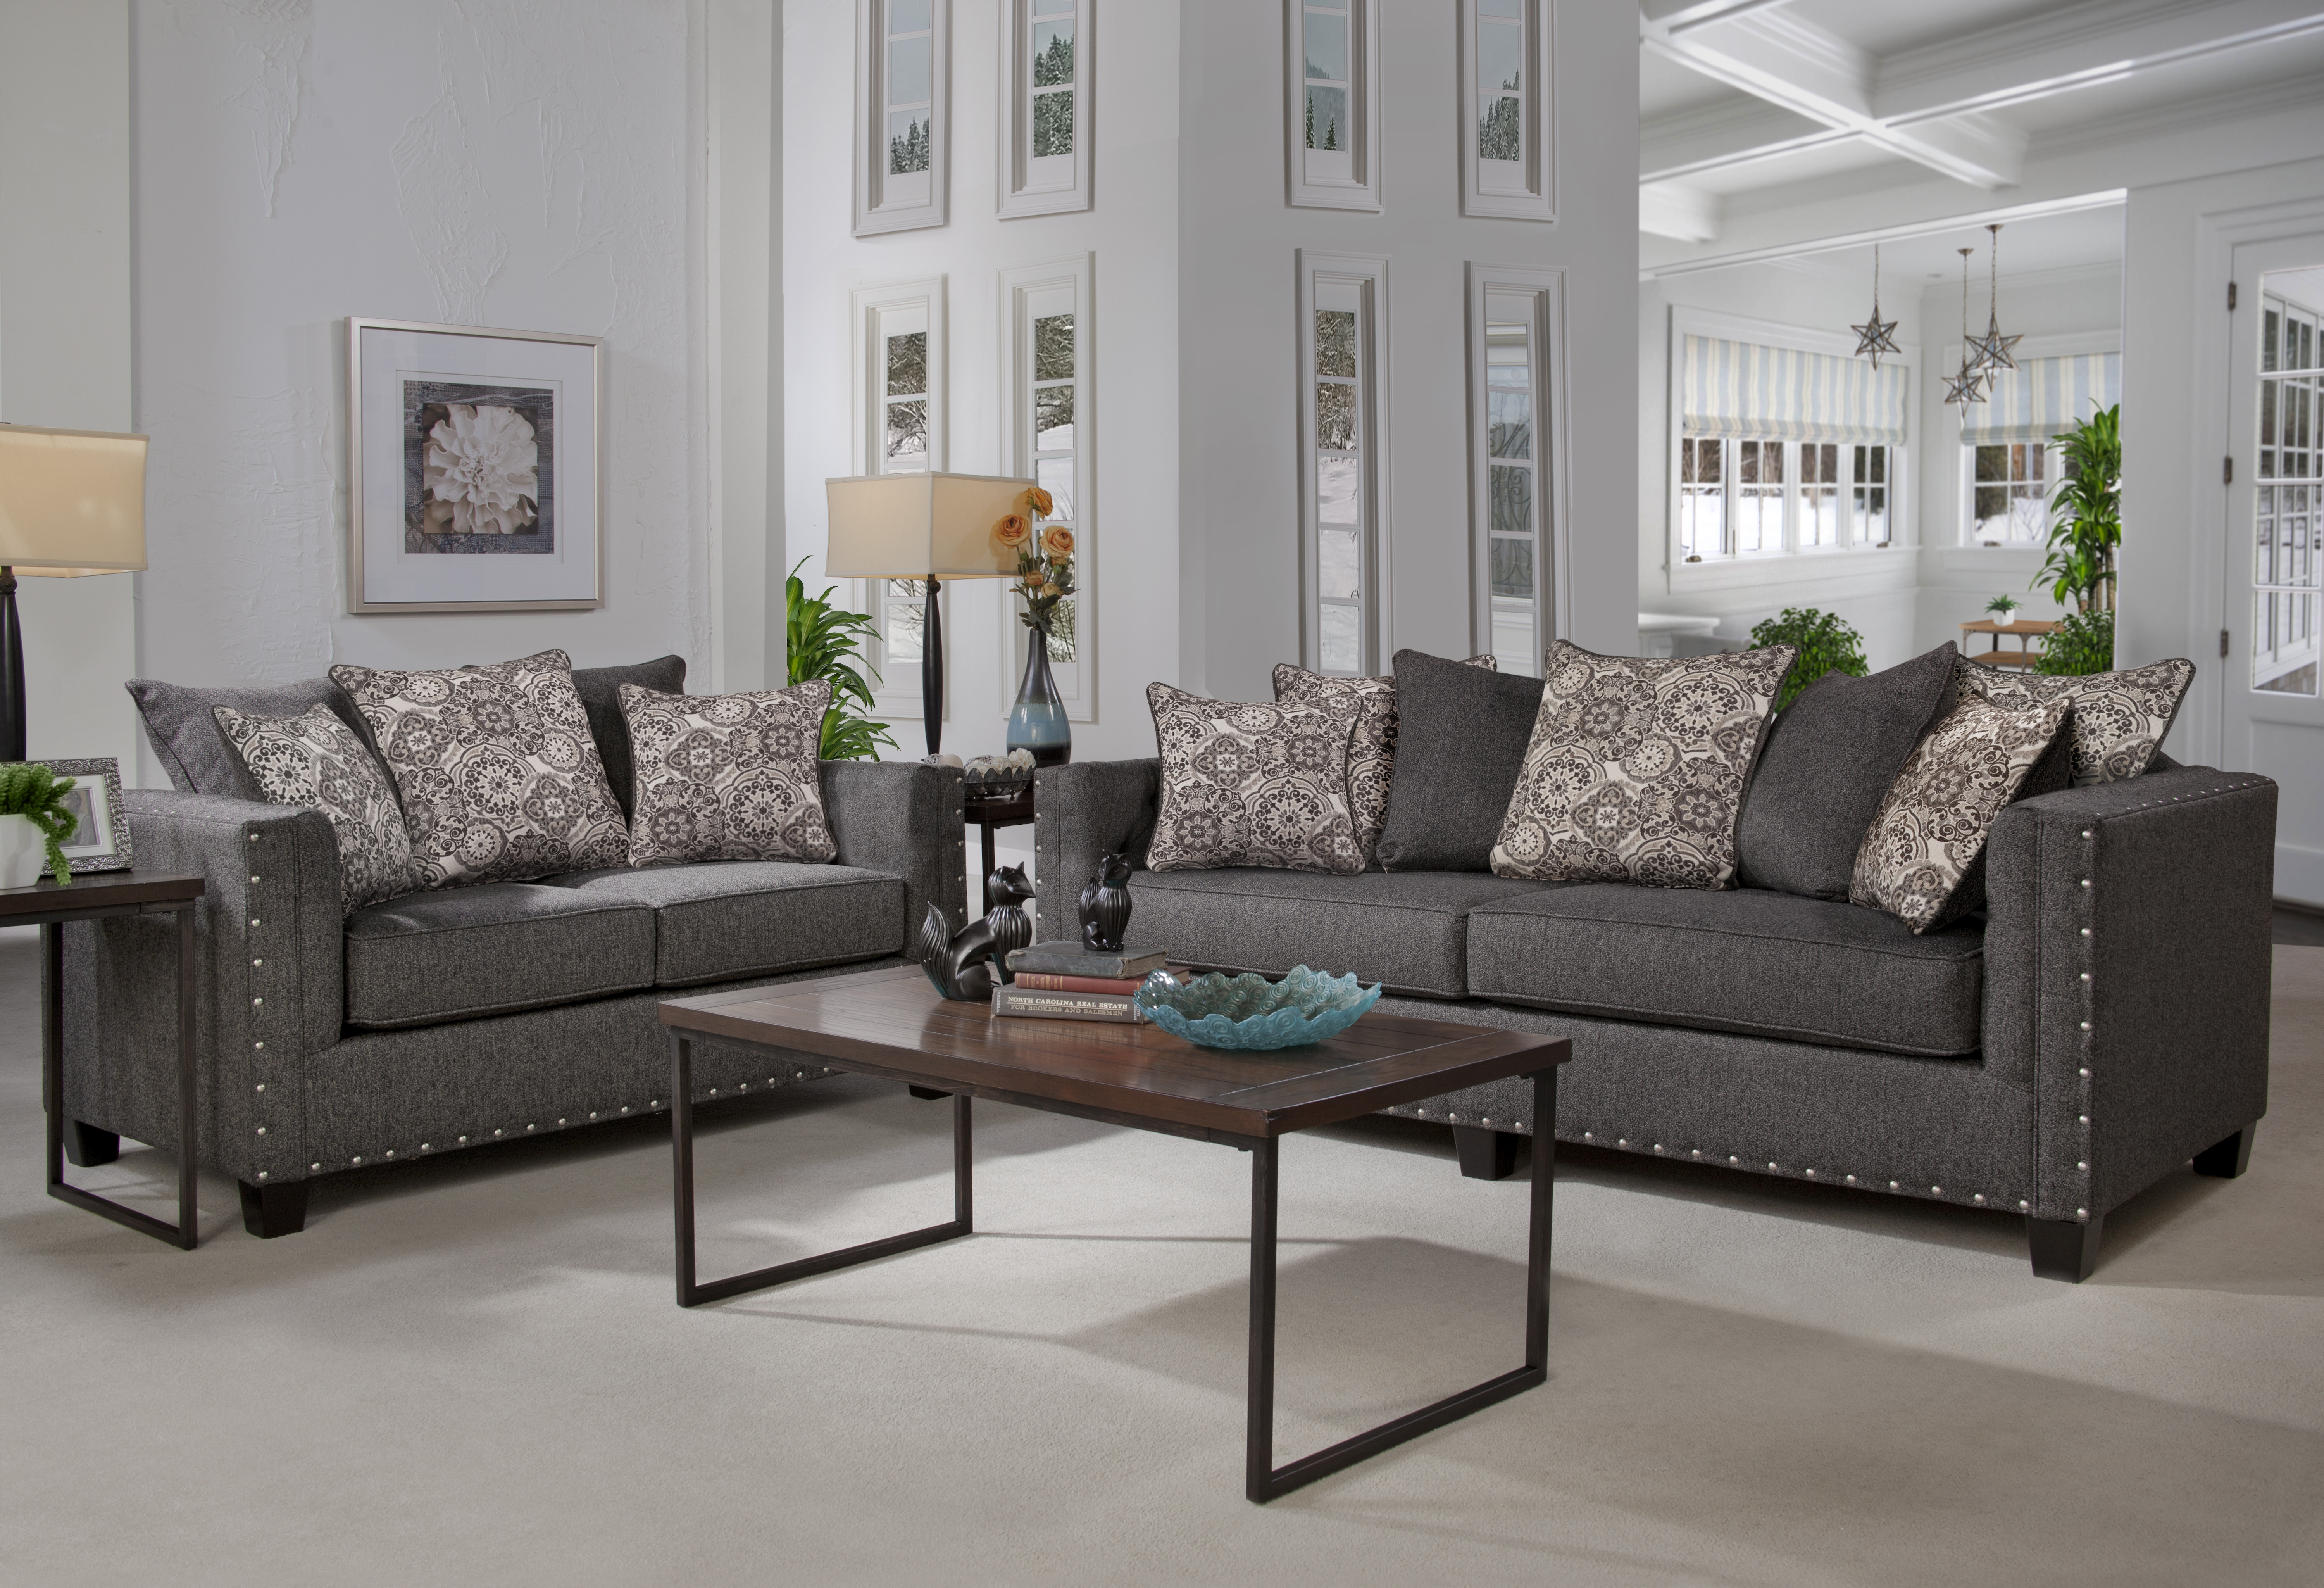 Hughes Furniture Sofa